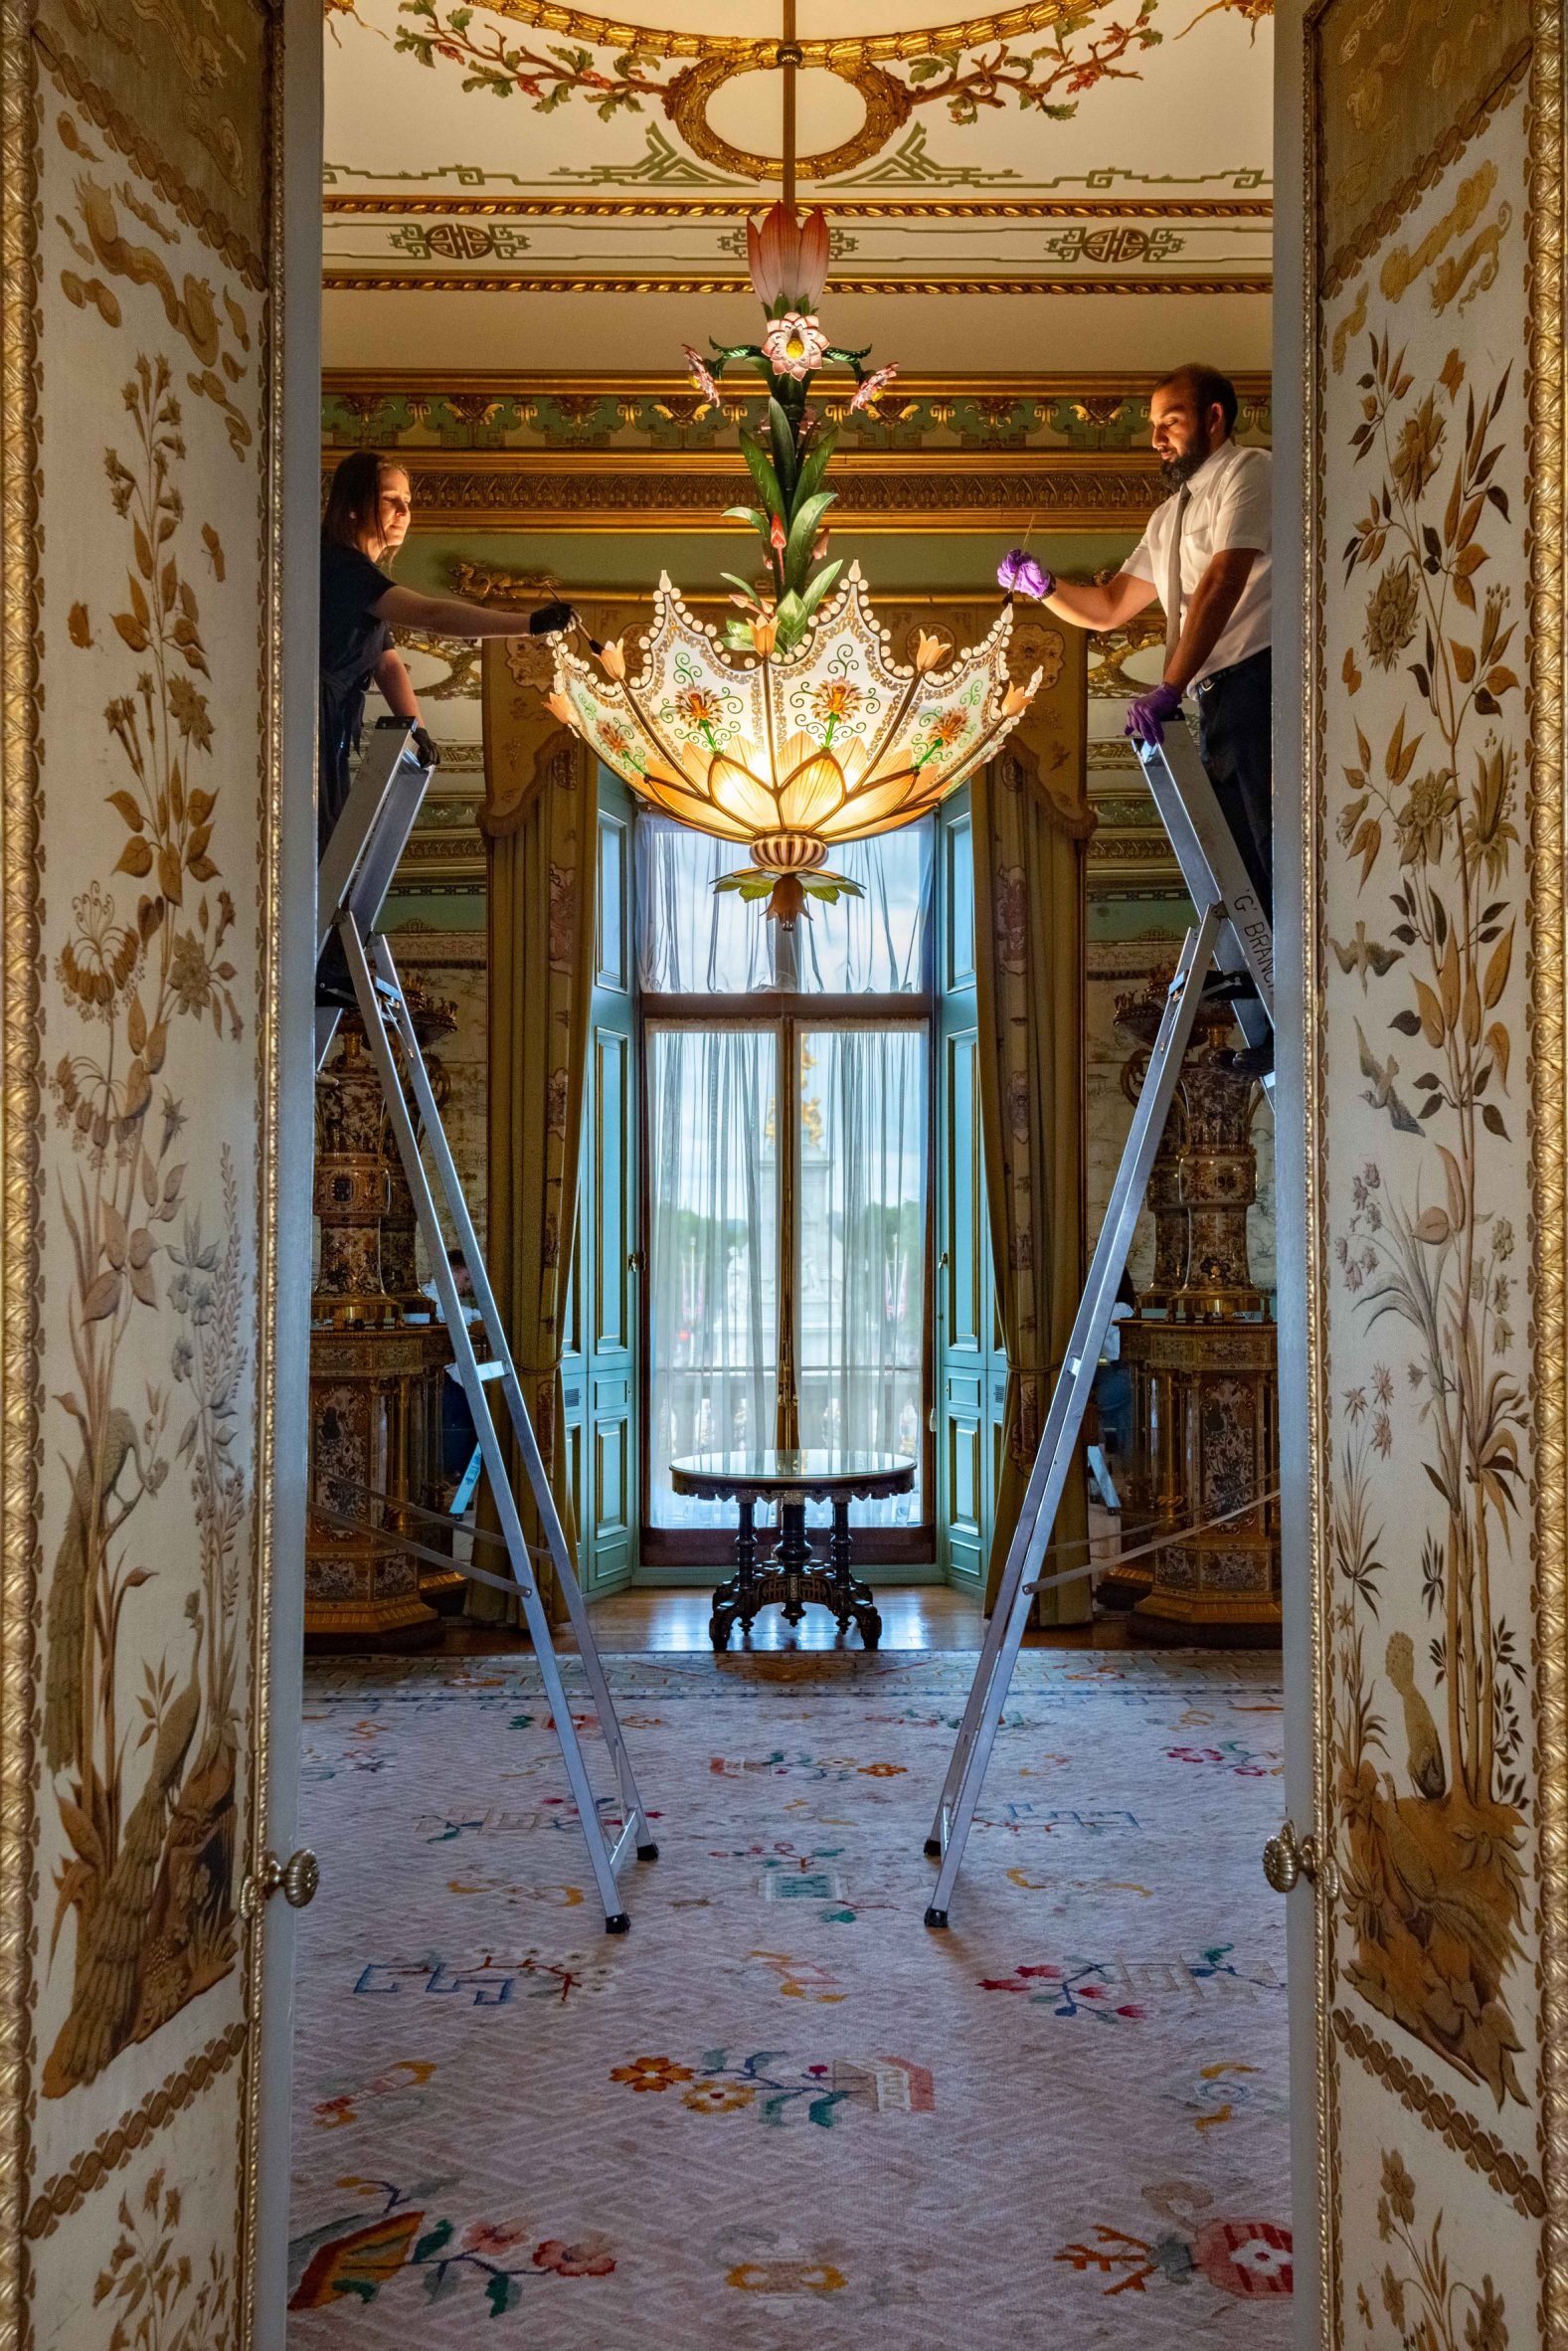 Lotus-shaped chandelier in Buckingham Palace's east wing